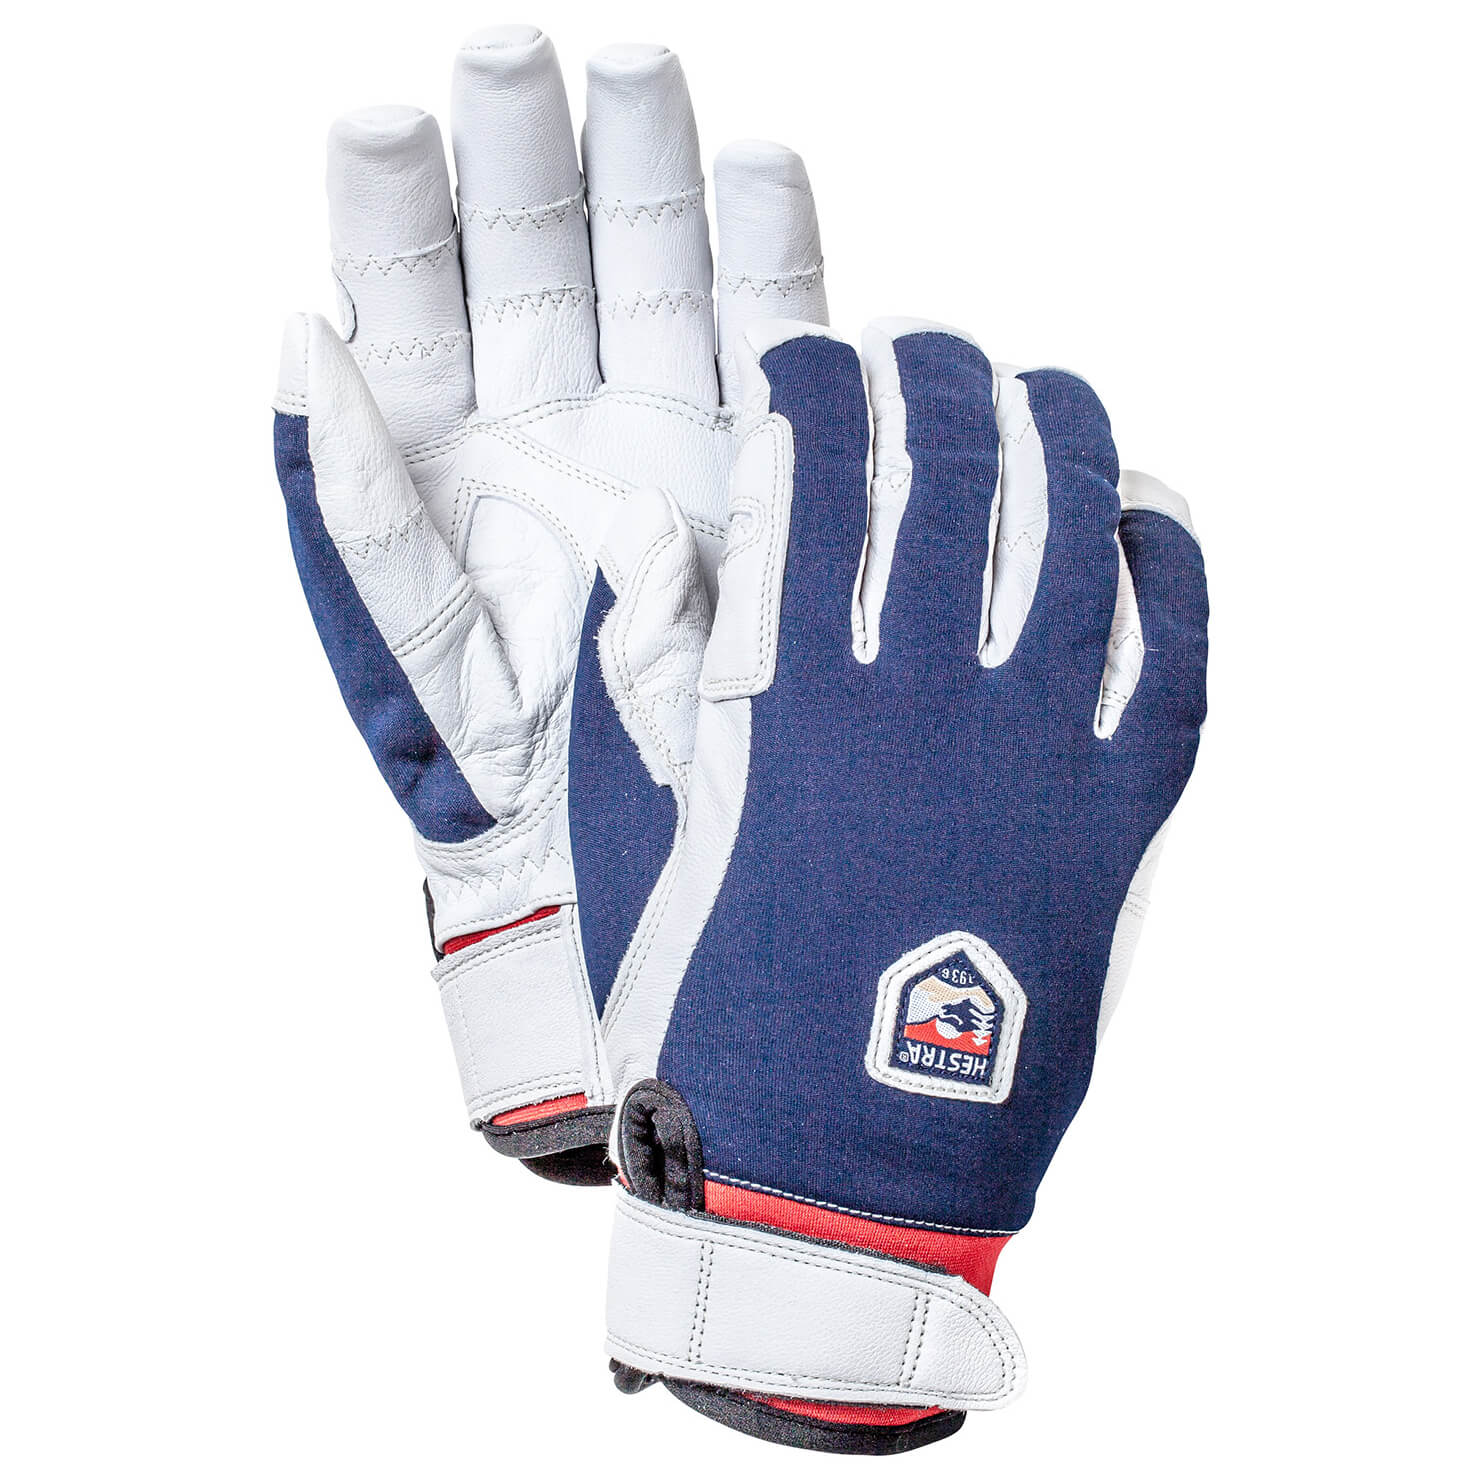 Перчатки Hestra Ergo Grip Active 5 Finger, цвет Navy/Offwhite боксерские перчатки bad boy active boxing gloves черный белый 18 унций